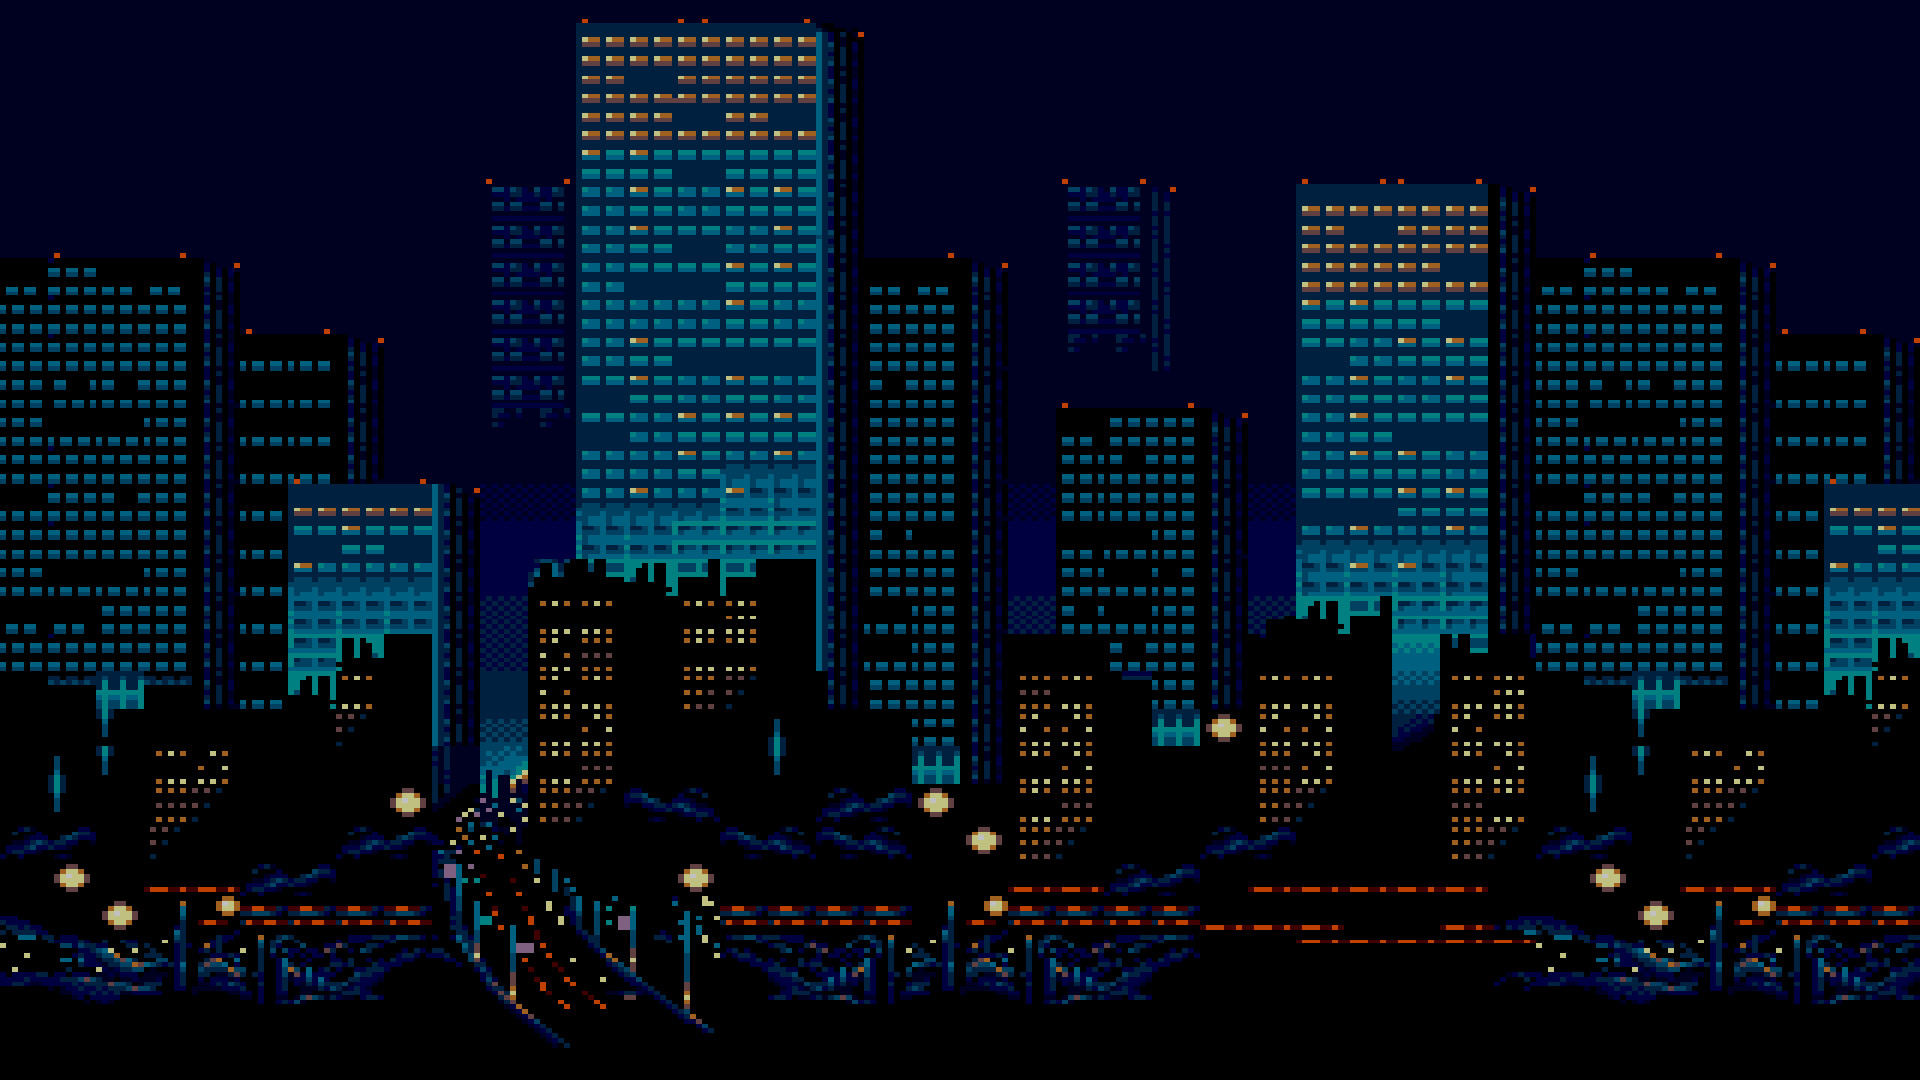 1920x1080 A city at night, pixel art edition.